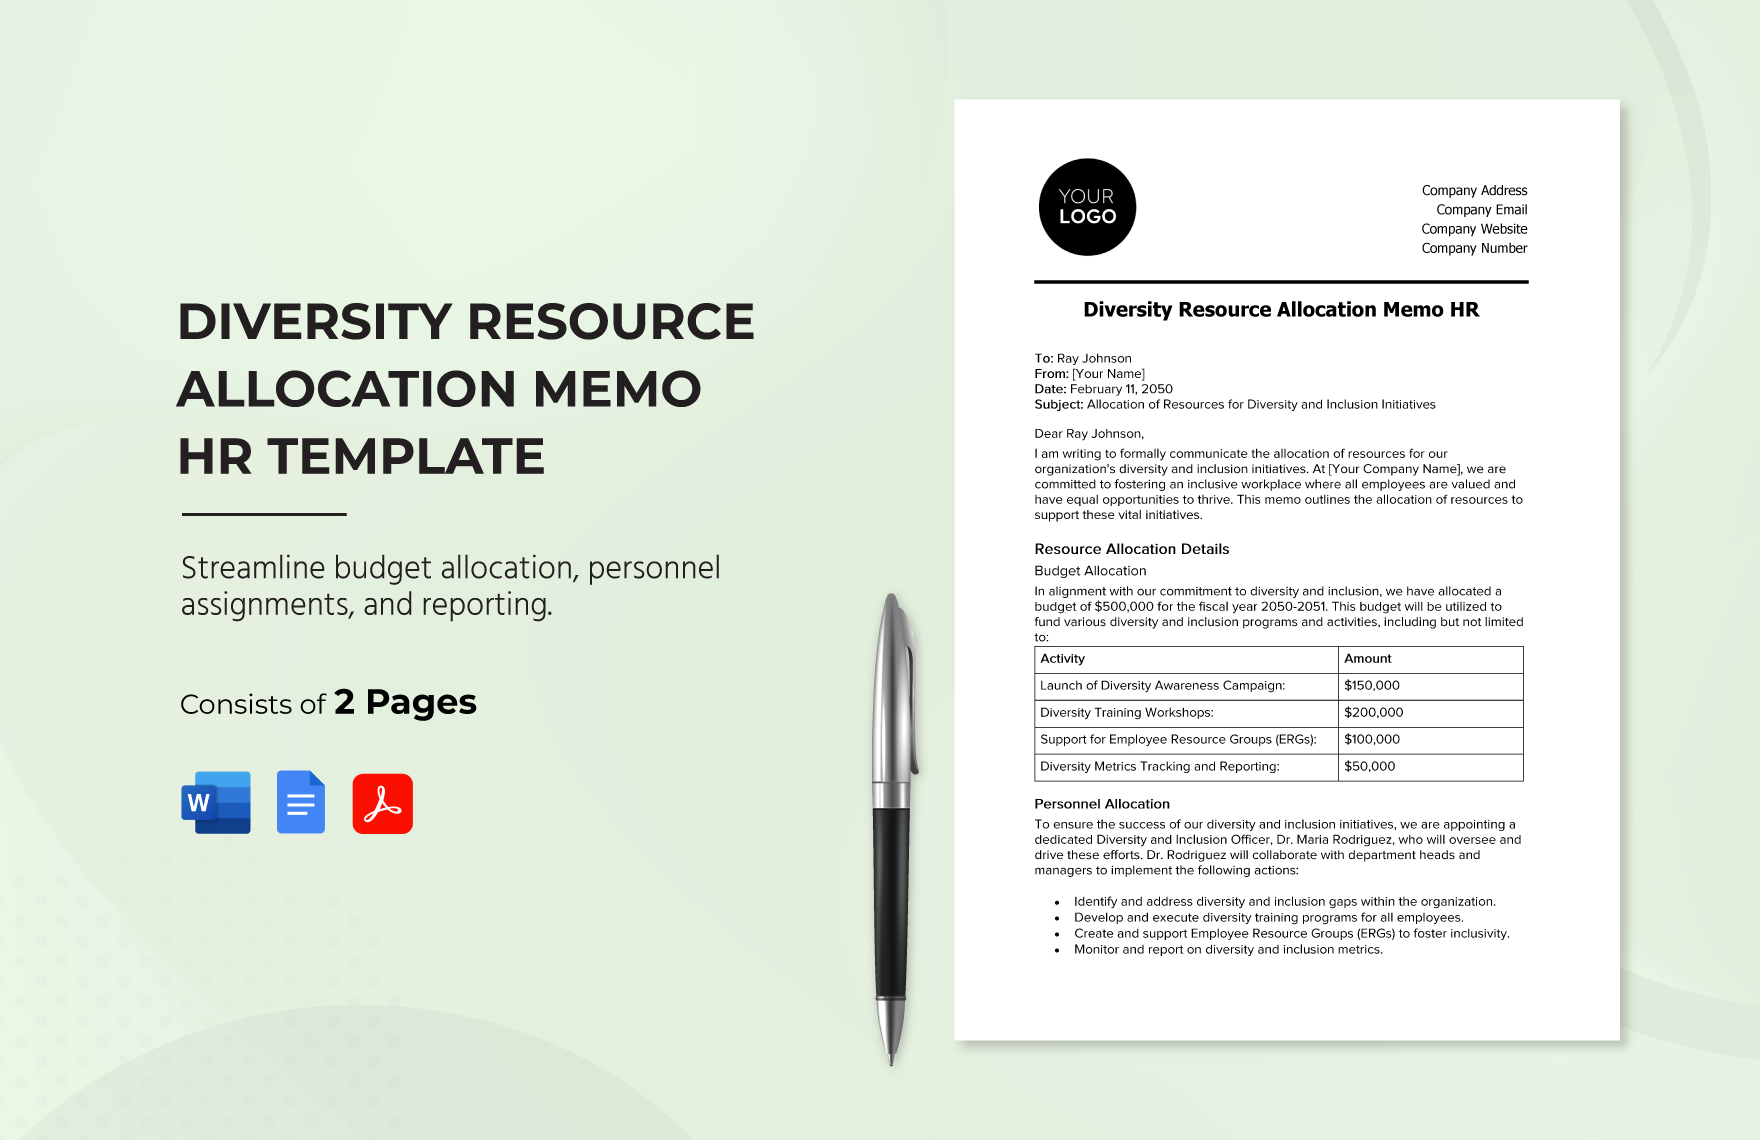 Diversity Resource Allocation Memo HR Template in Word, Google Docs, PDF